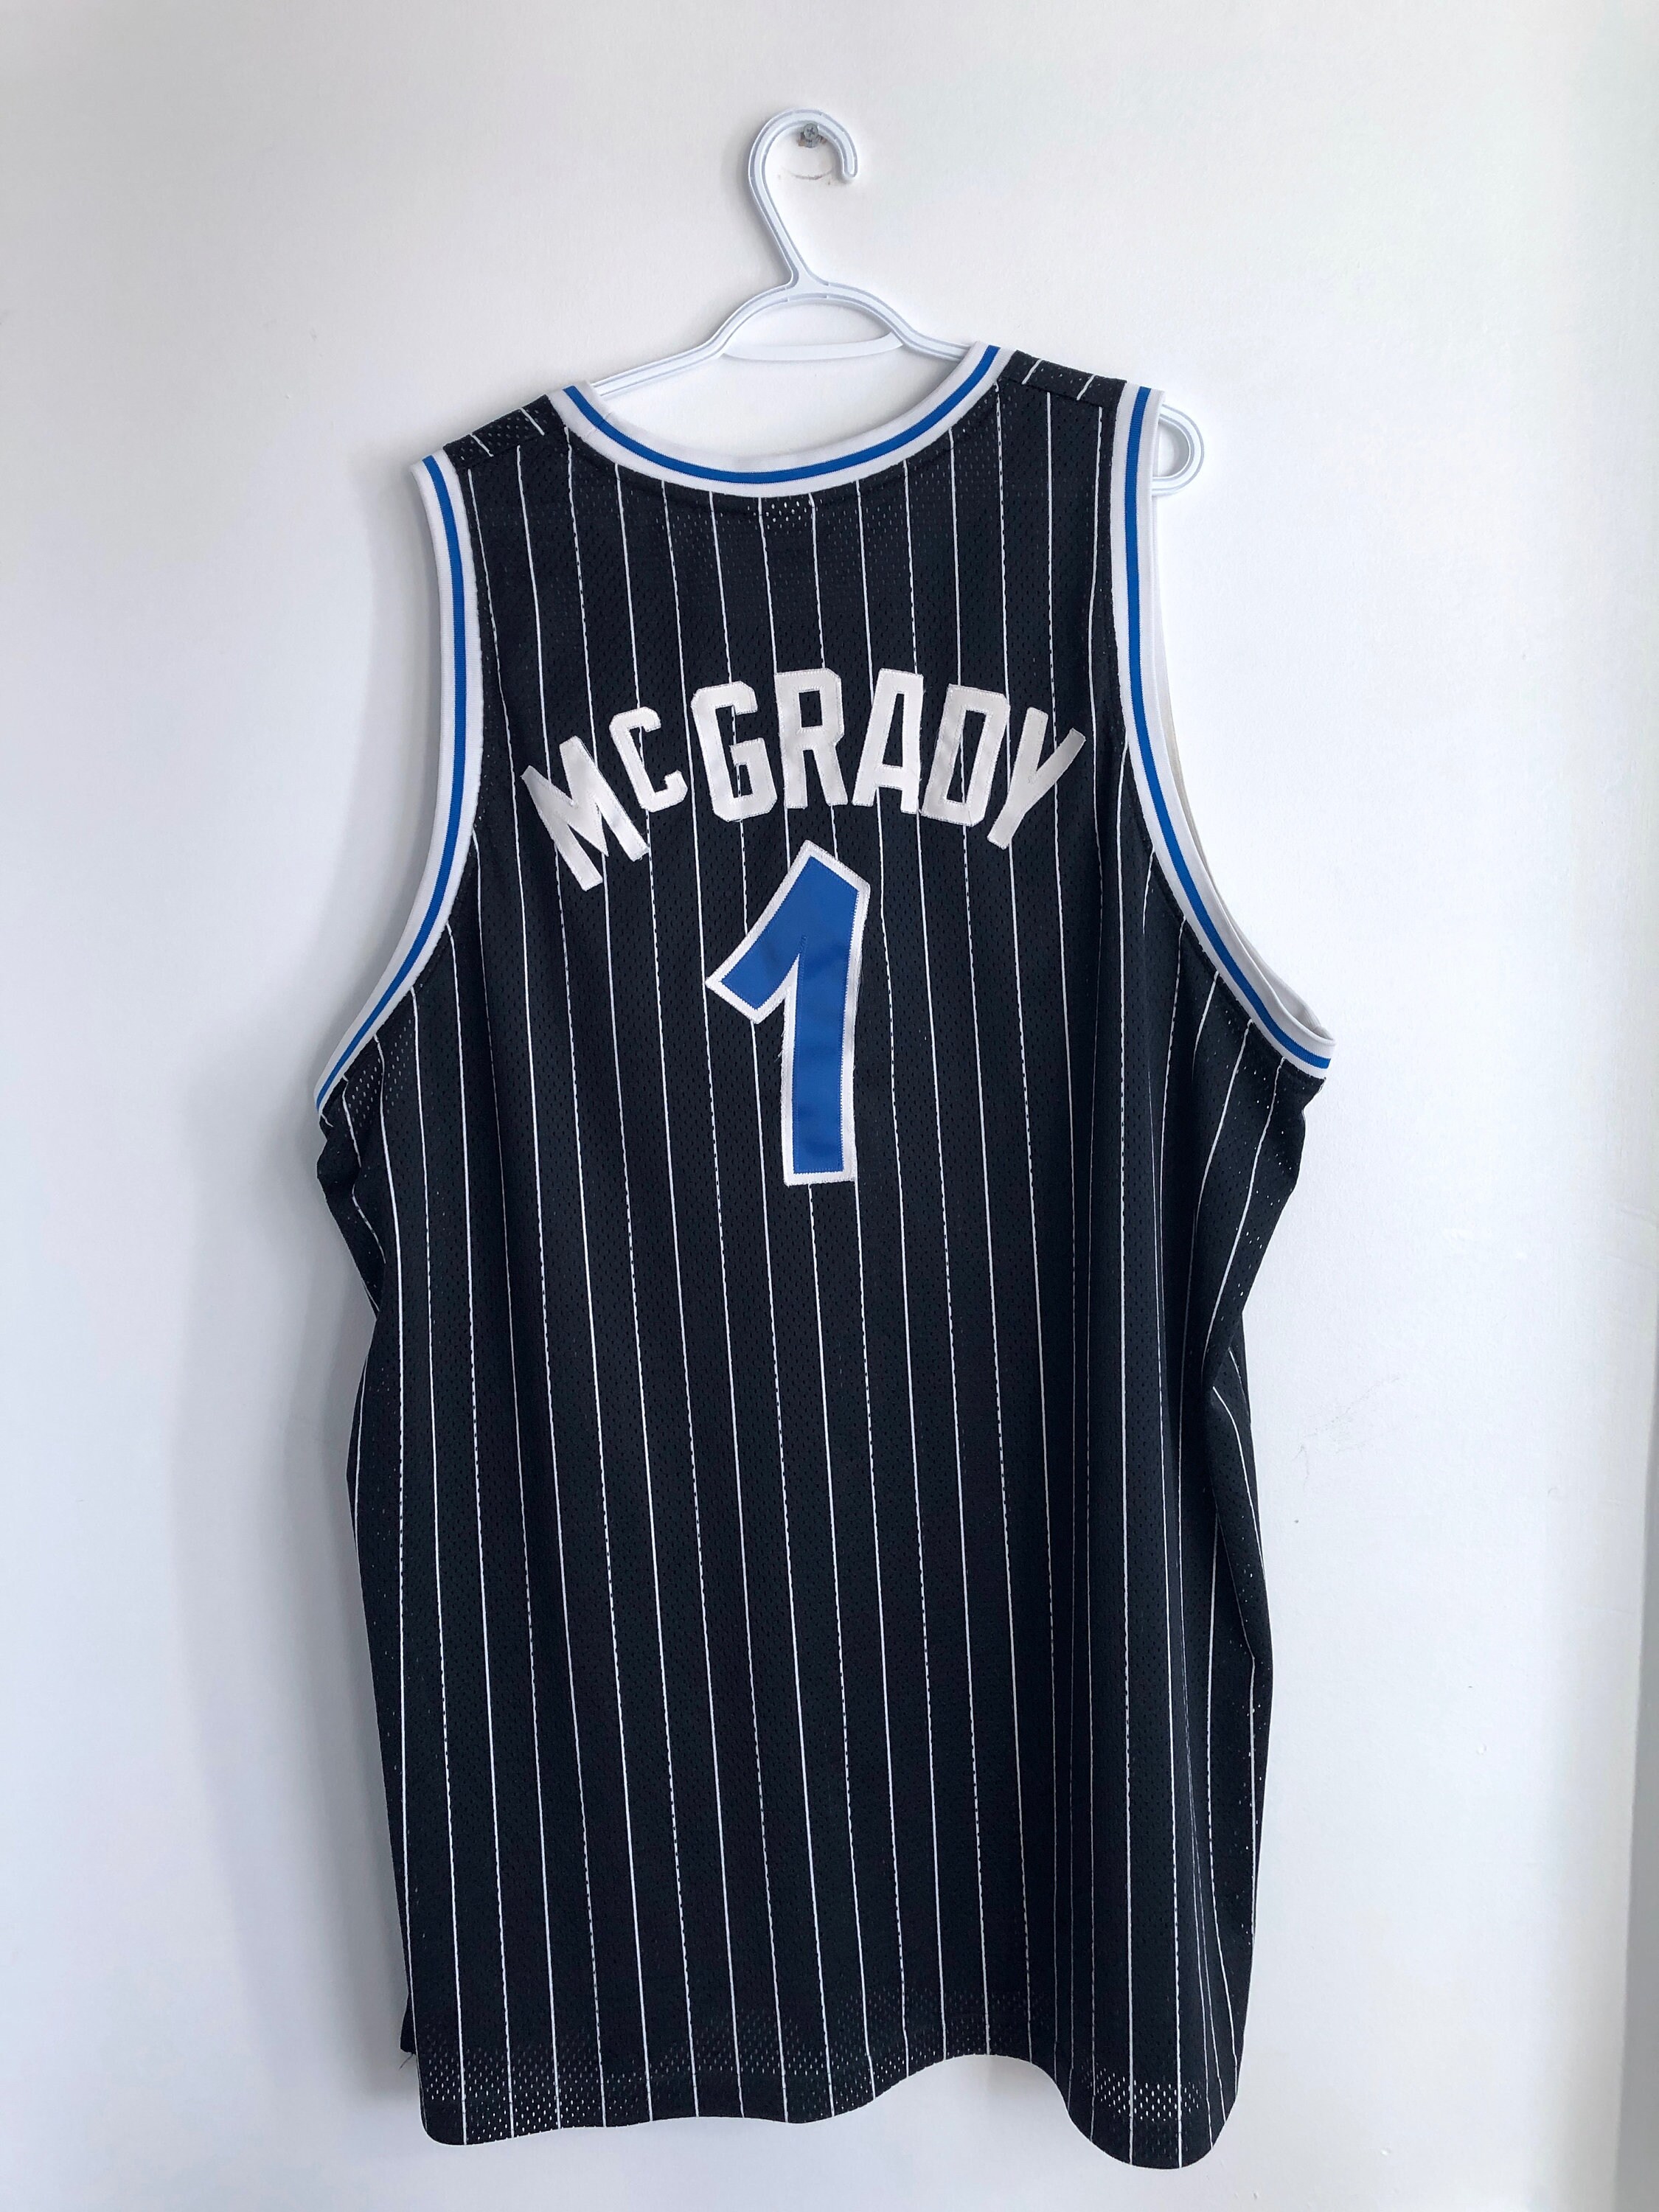 Vintage Tracey McGrady Orlando Magic Reebok Authentic Jersey 56 NBA